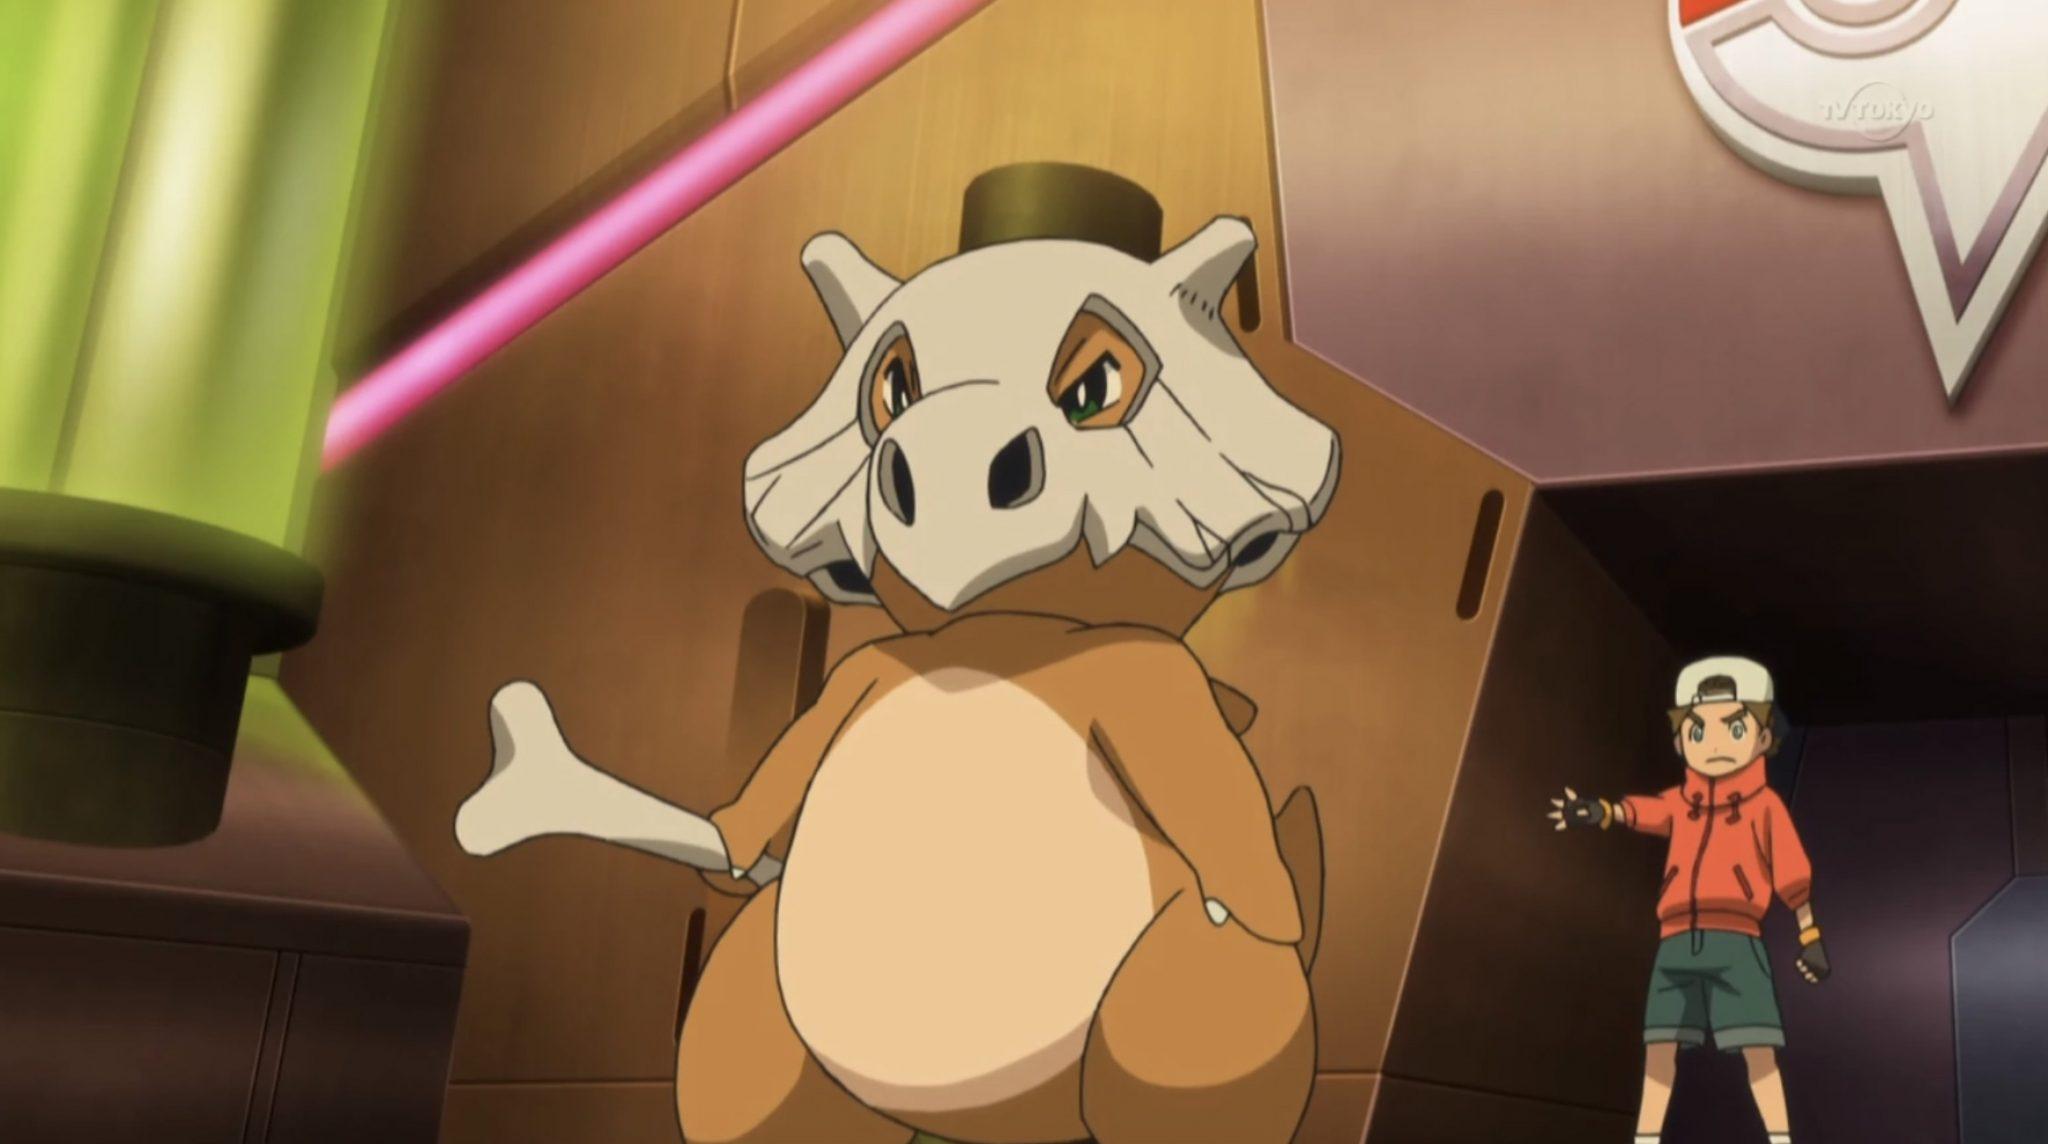 Screenshot of Cubone from Pokemon anime.